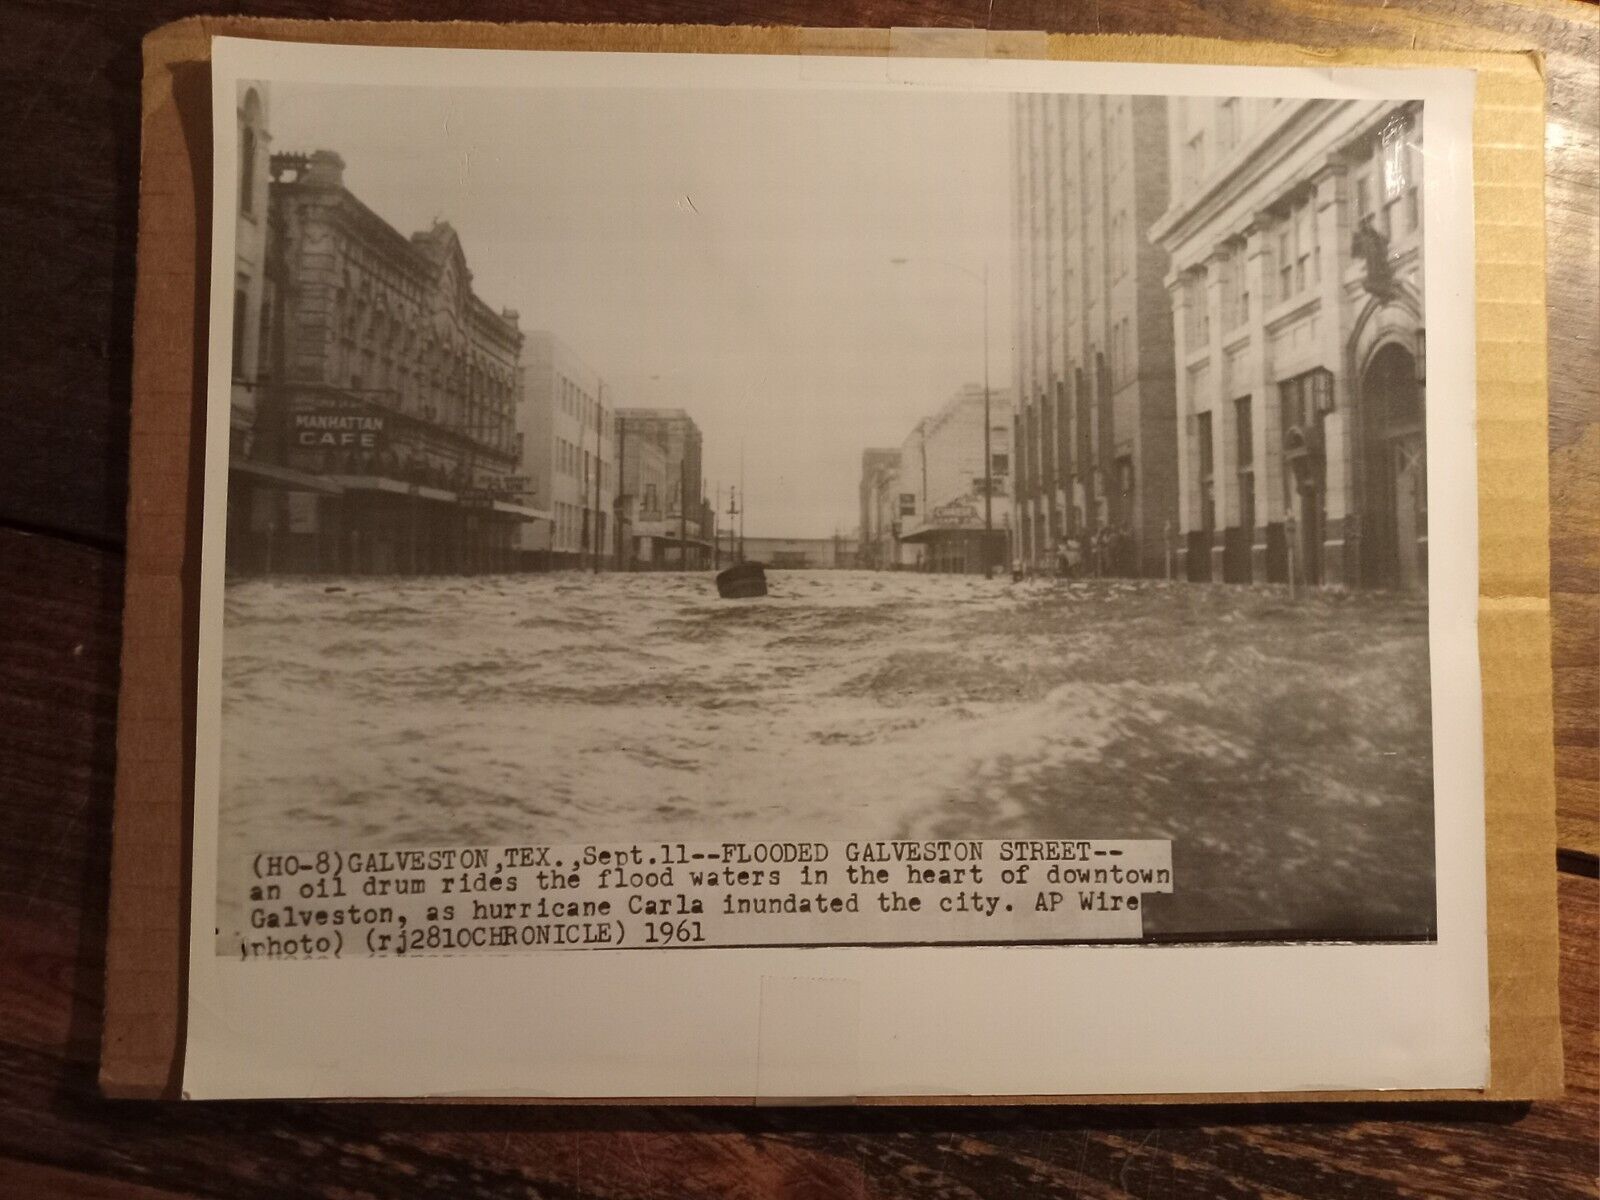 Galveston Texas - HURRICANE CARLA - press photo - Sept 1961 - The Strand flooded